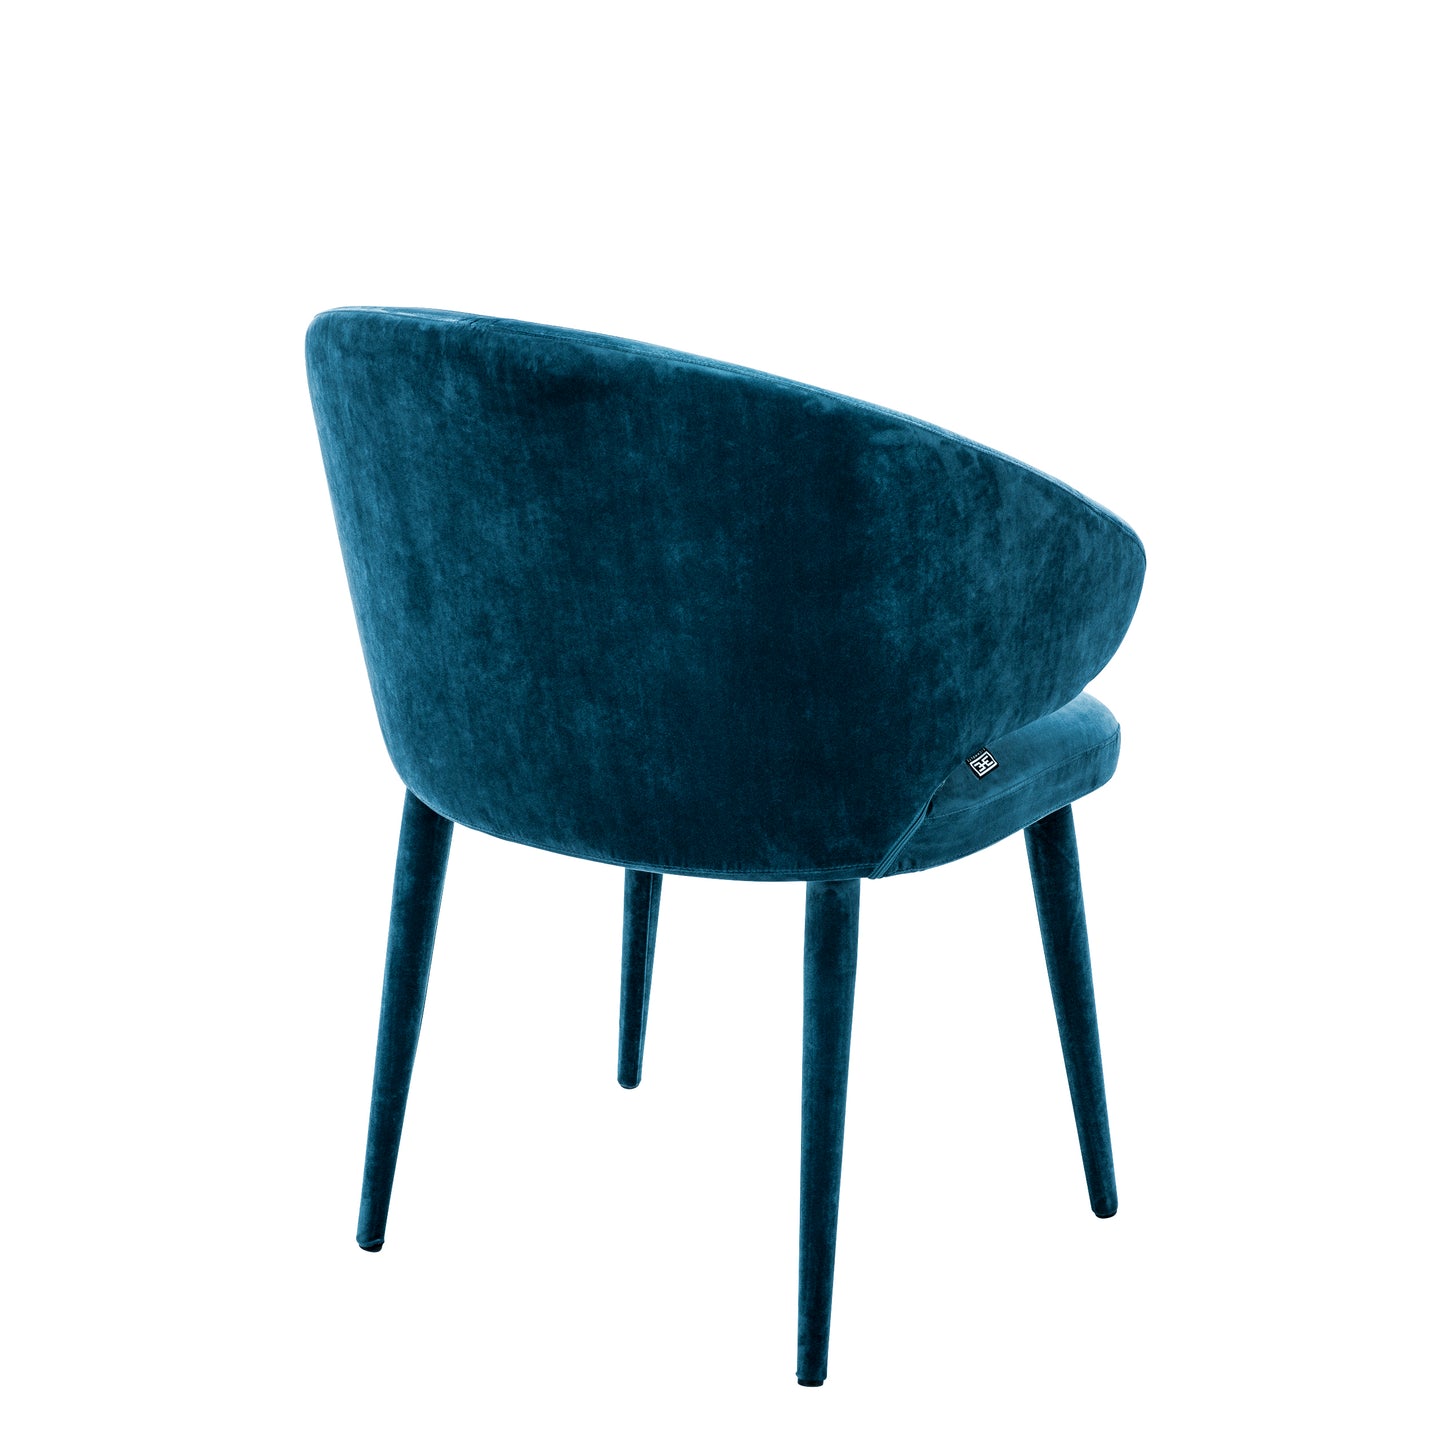 Cardinale Dining Room Chair in Teal Blue Rock Velvet 